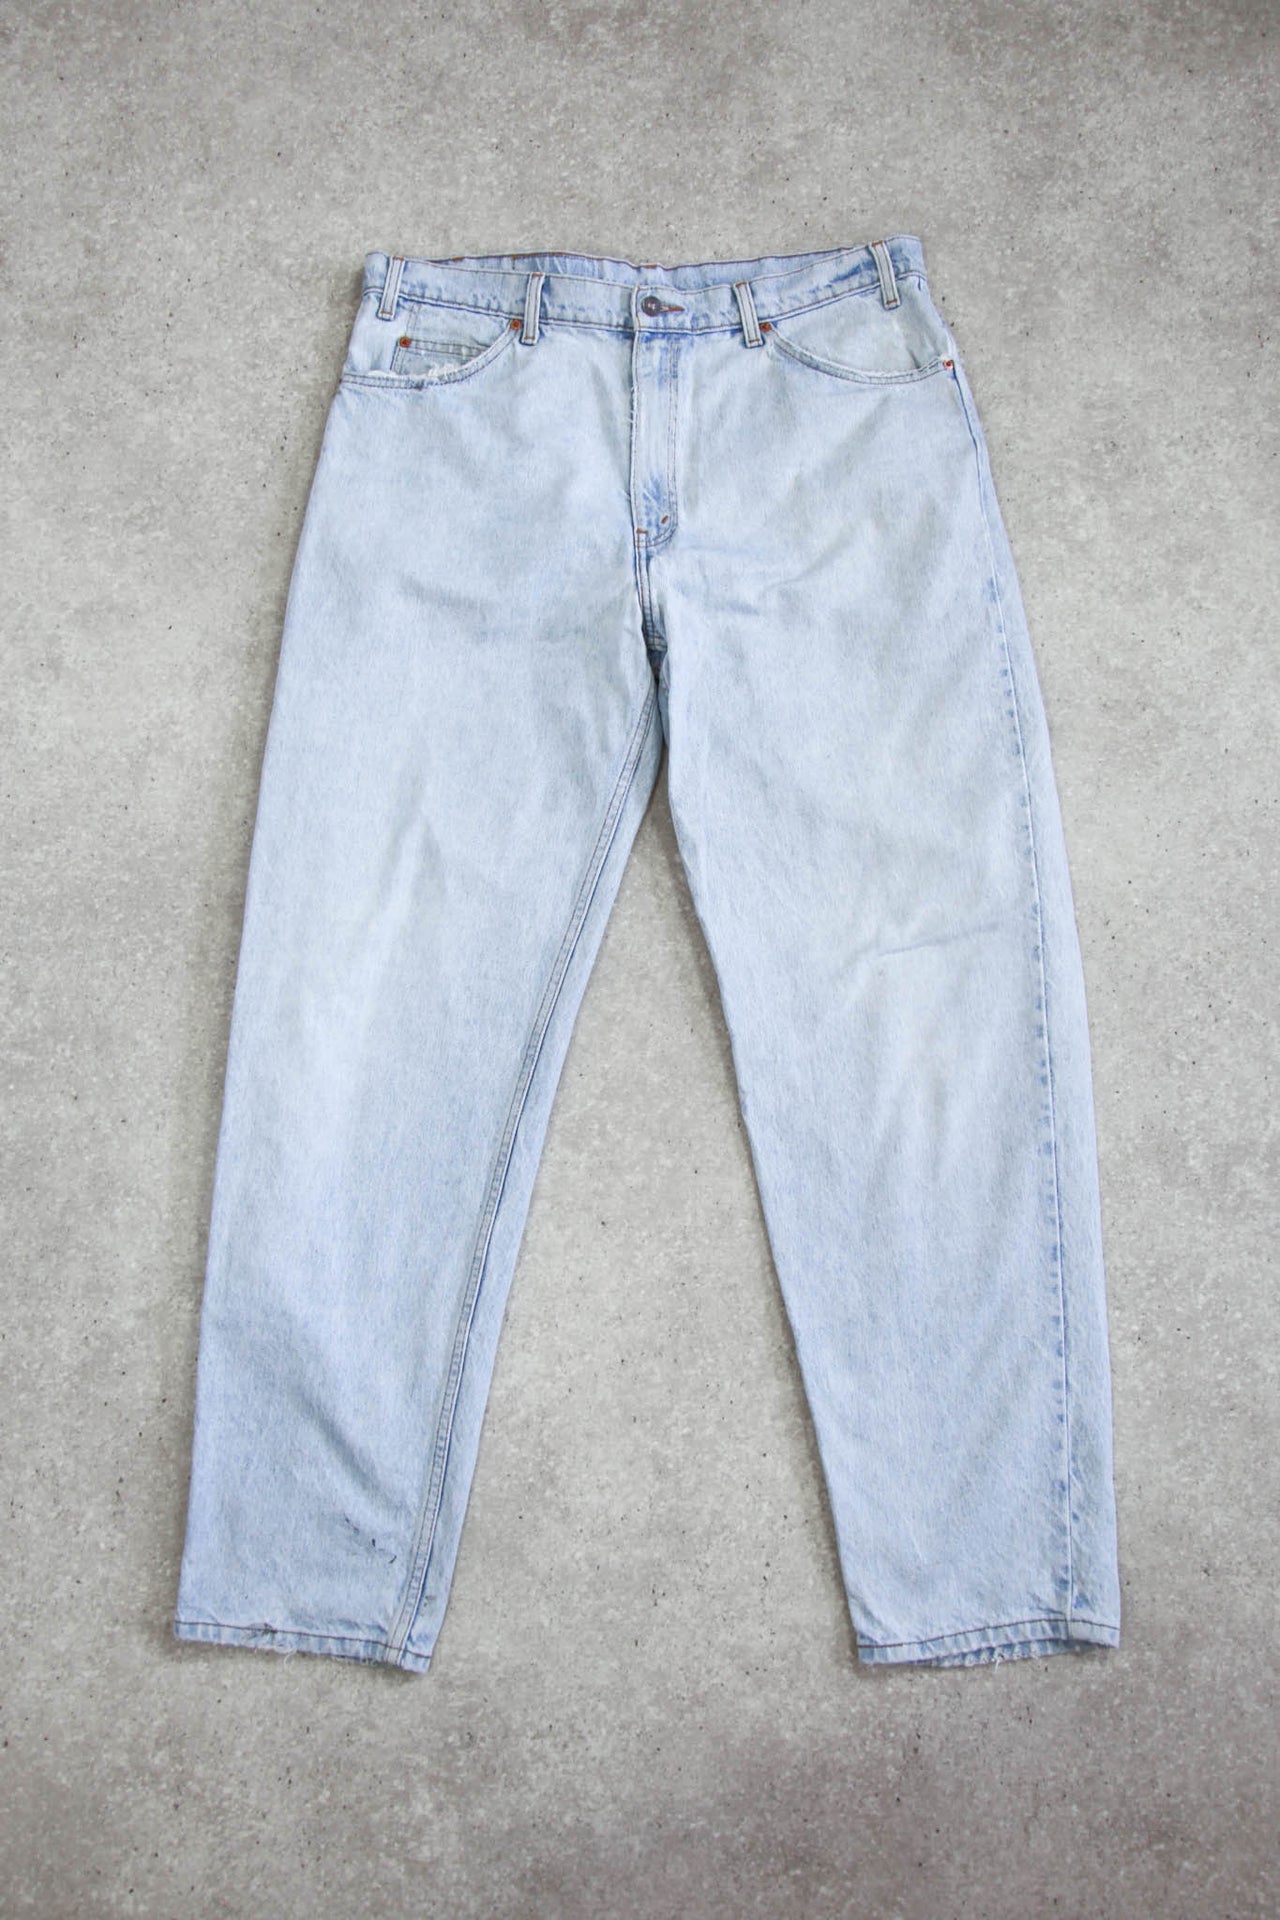 Levi's 550 Orange Tab Super Light Wash Jeans (W38 L32)